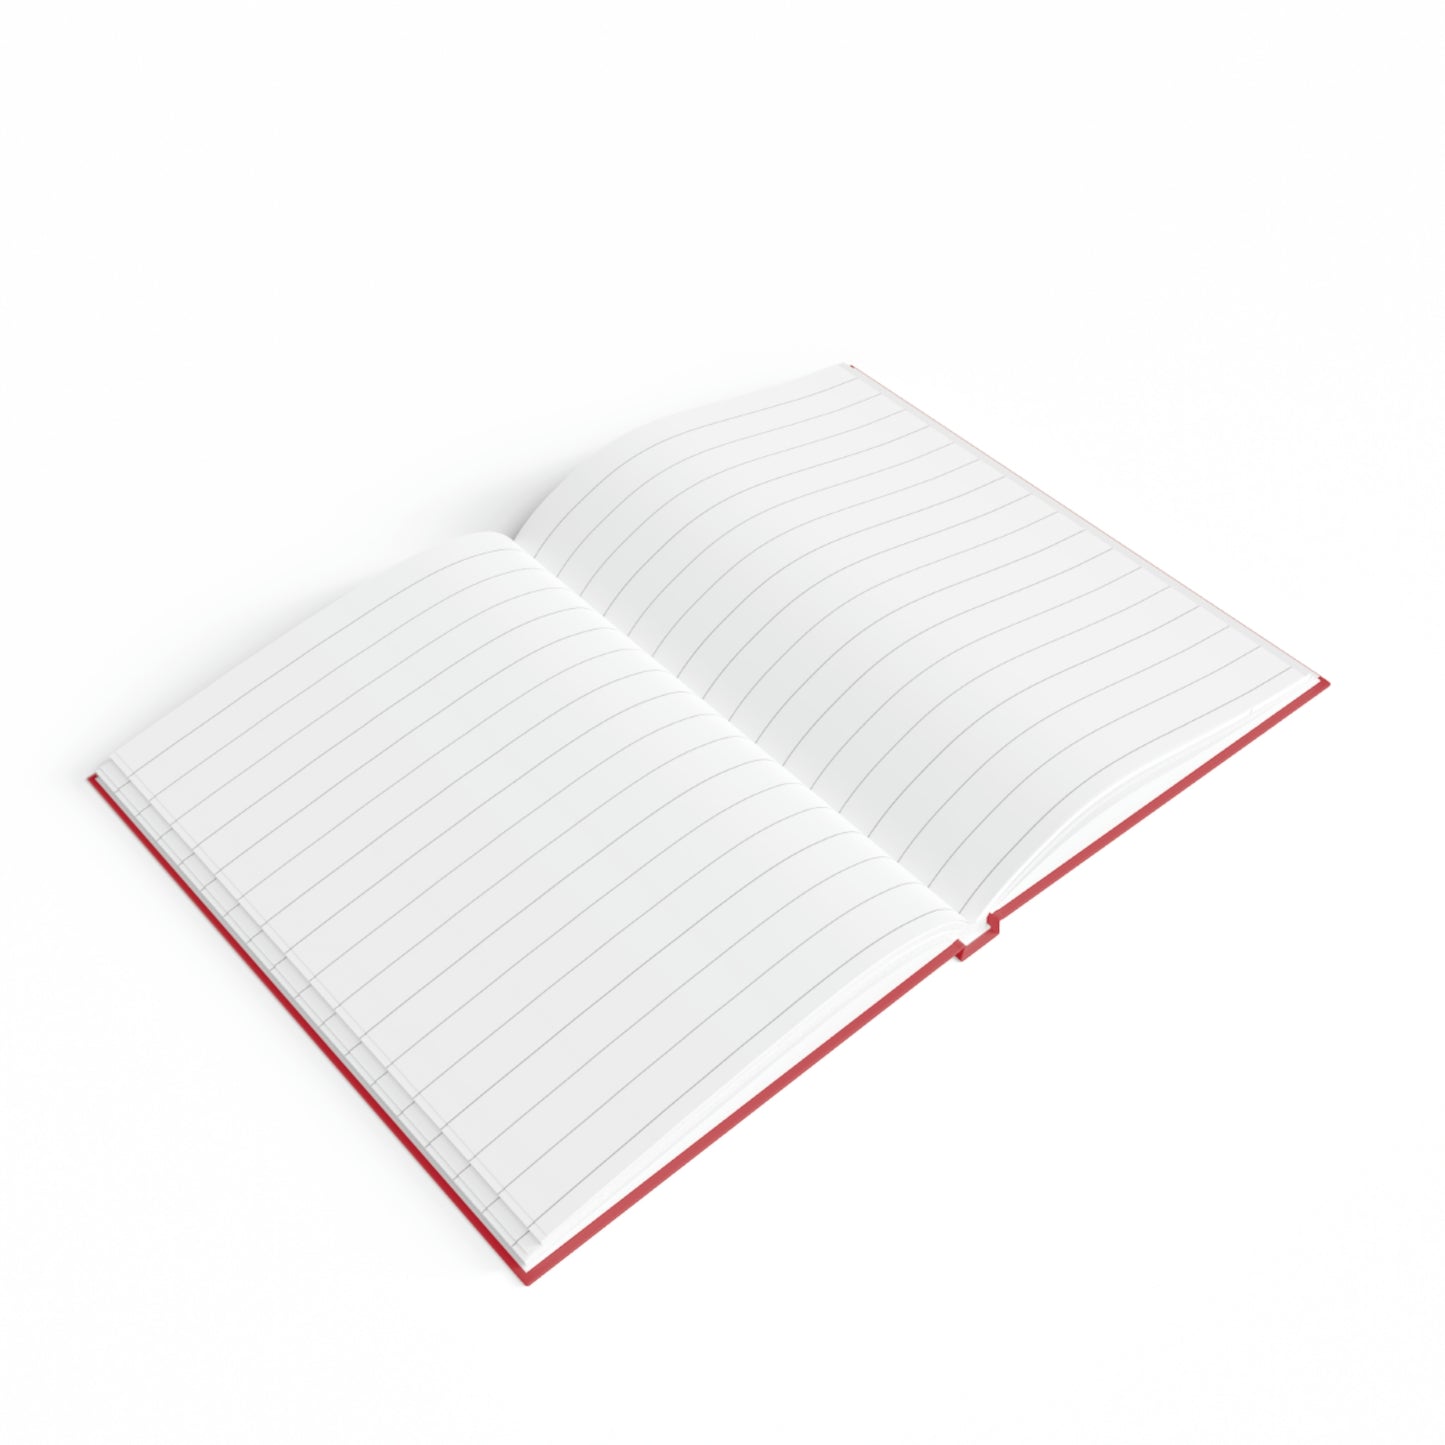 ABUNDANCE Journal - Ruled Line - Red Cover